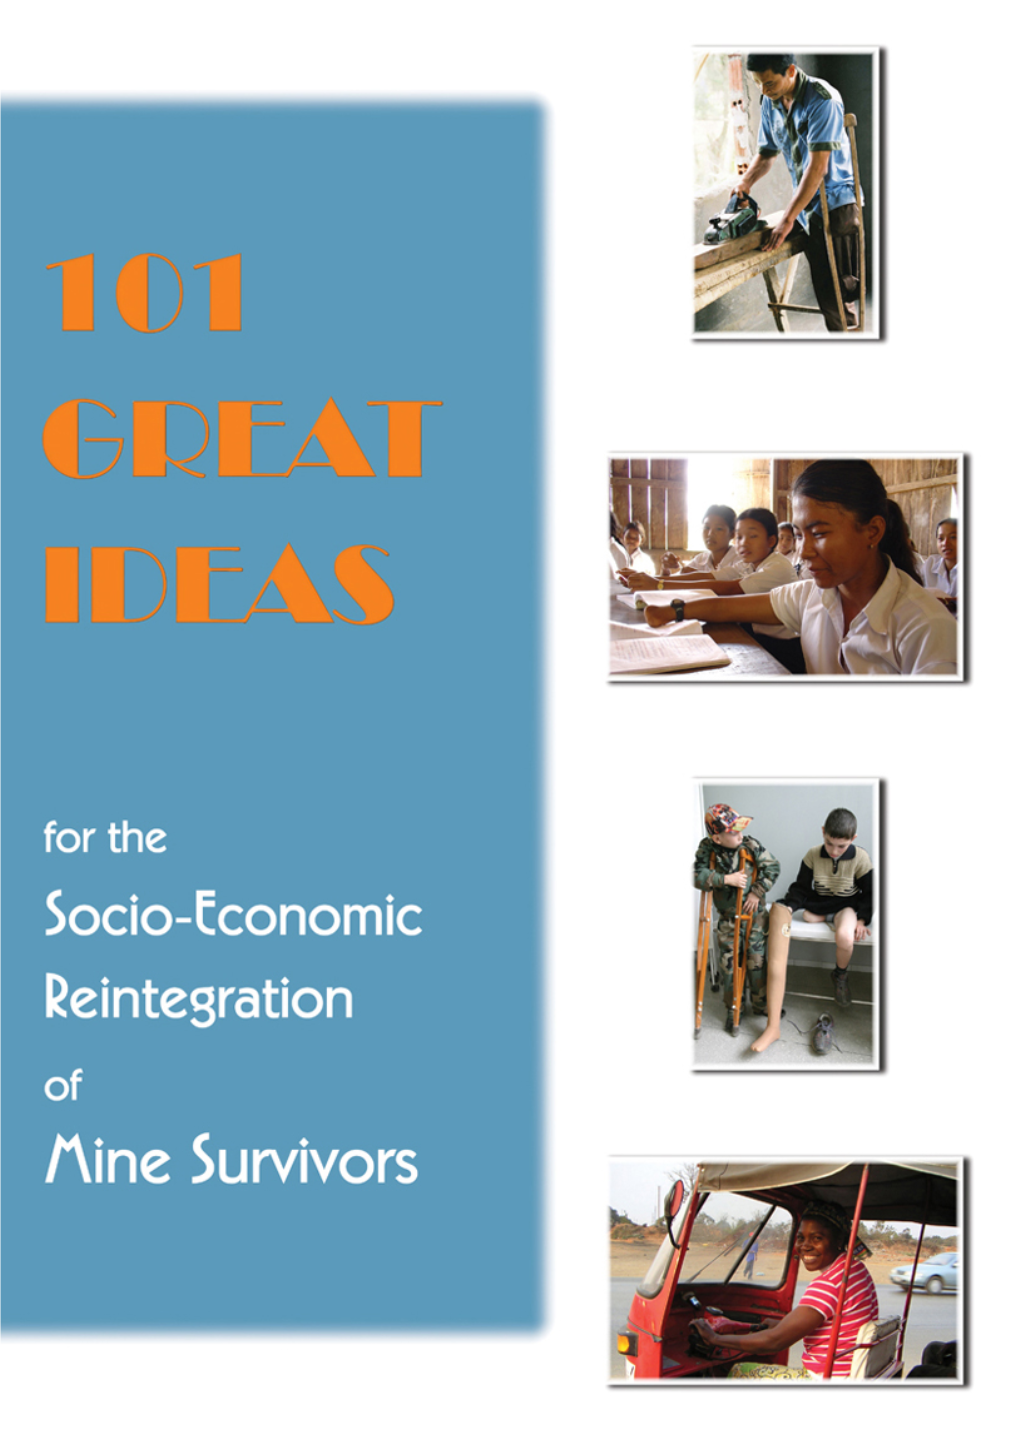 For the Socio-Economic Reintegration of Mine Survivors